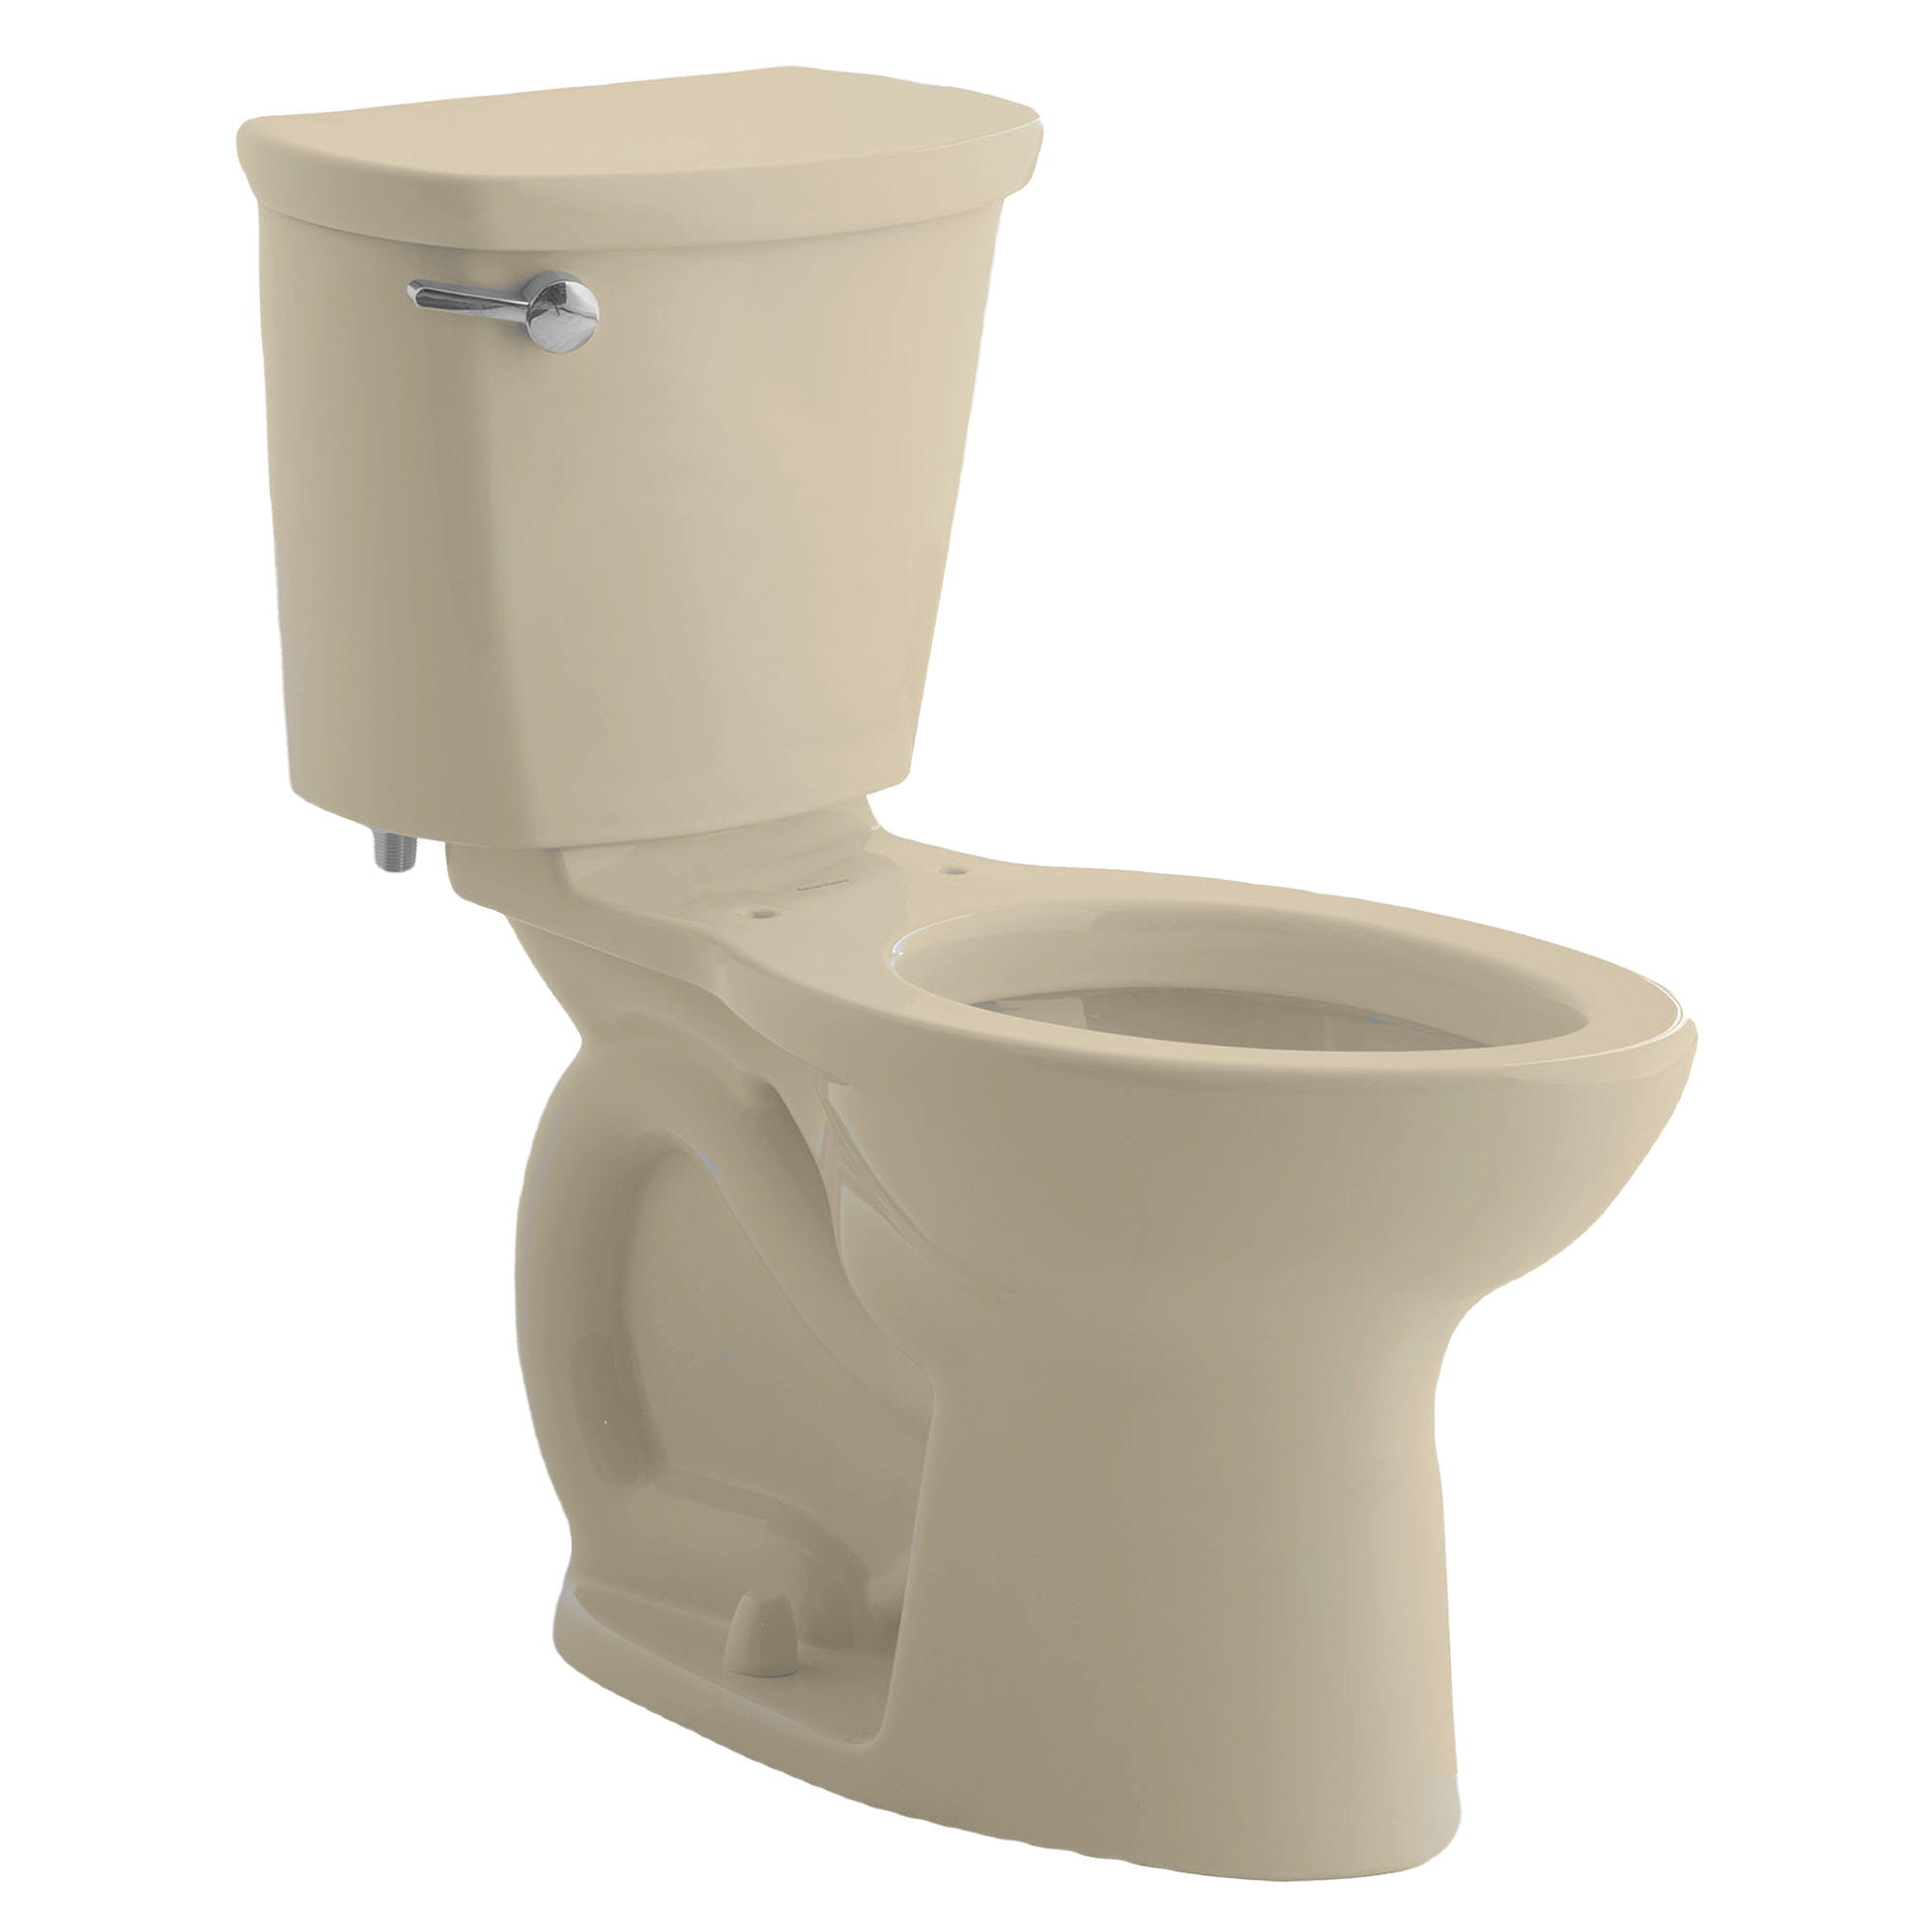 Cadet® PRO Two-Piece 1.6 gpf/6.0 Lpf Standard Height Elongated Toilet Less Seat